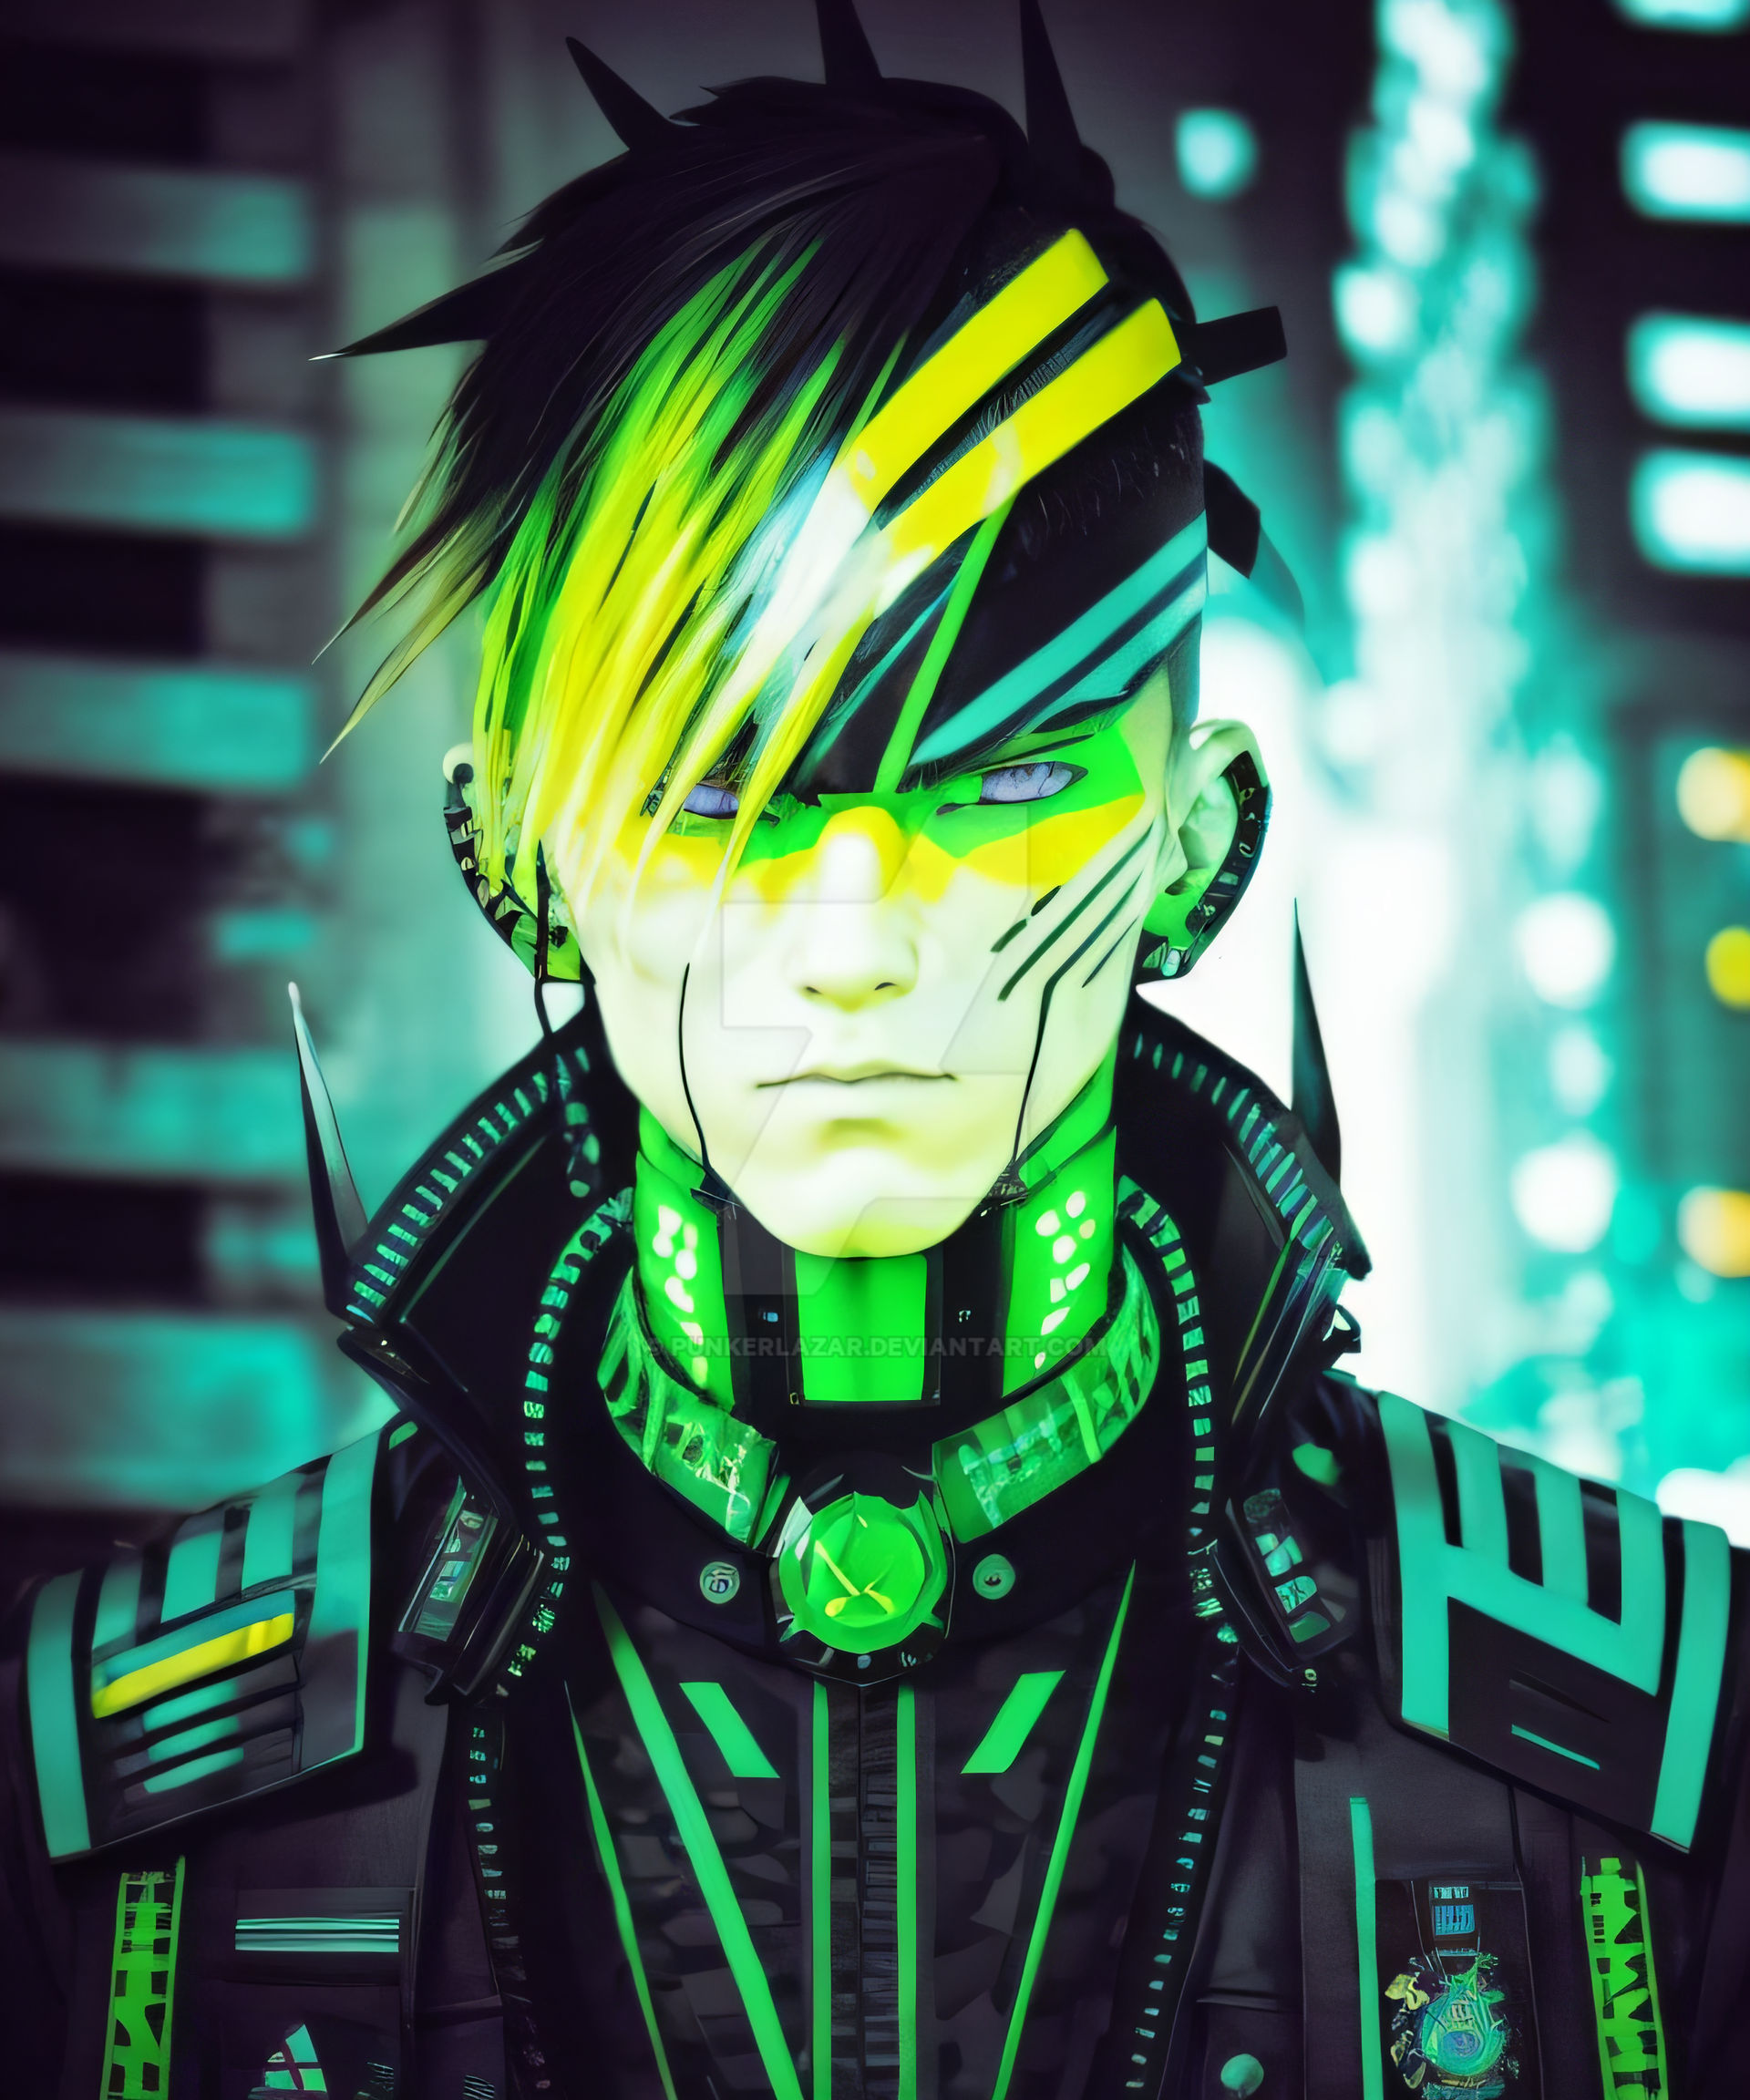 ANIME Cyberpunk Boy (4) by PunkerLazar on DeviantArt